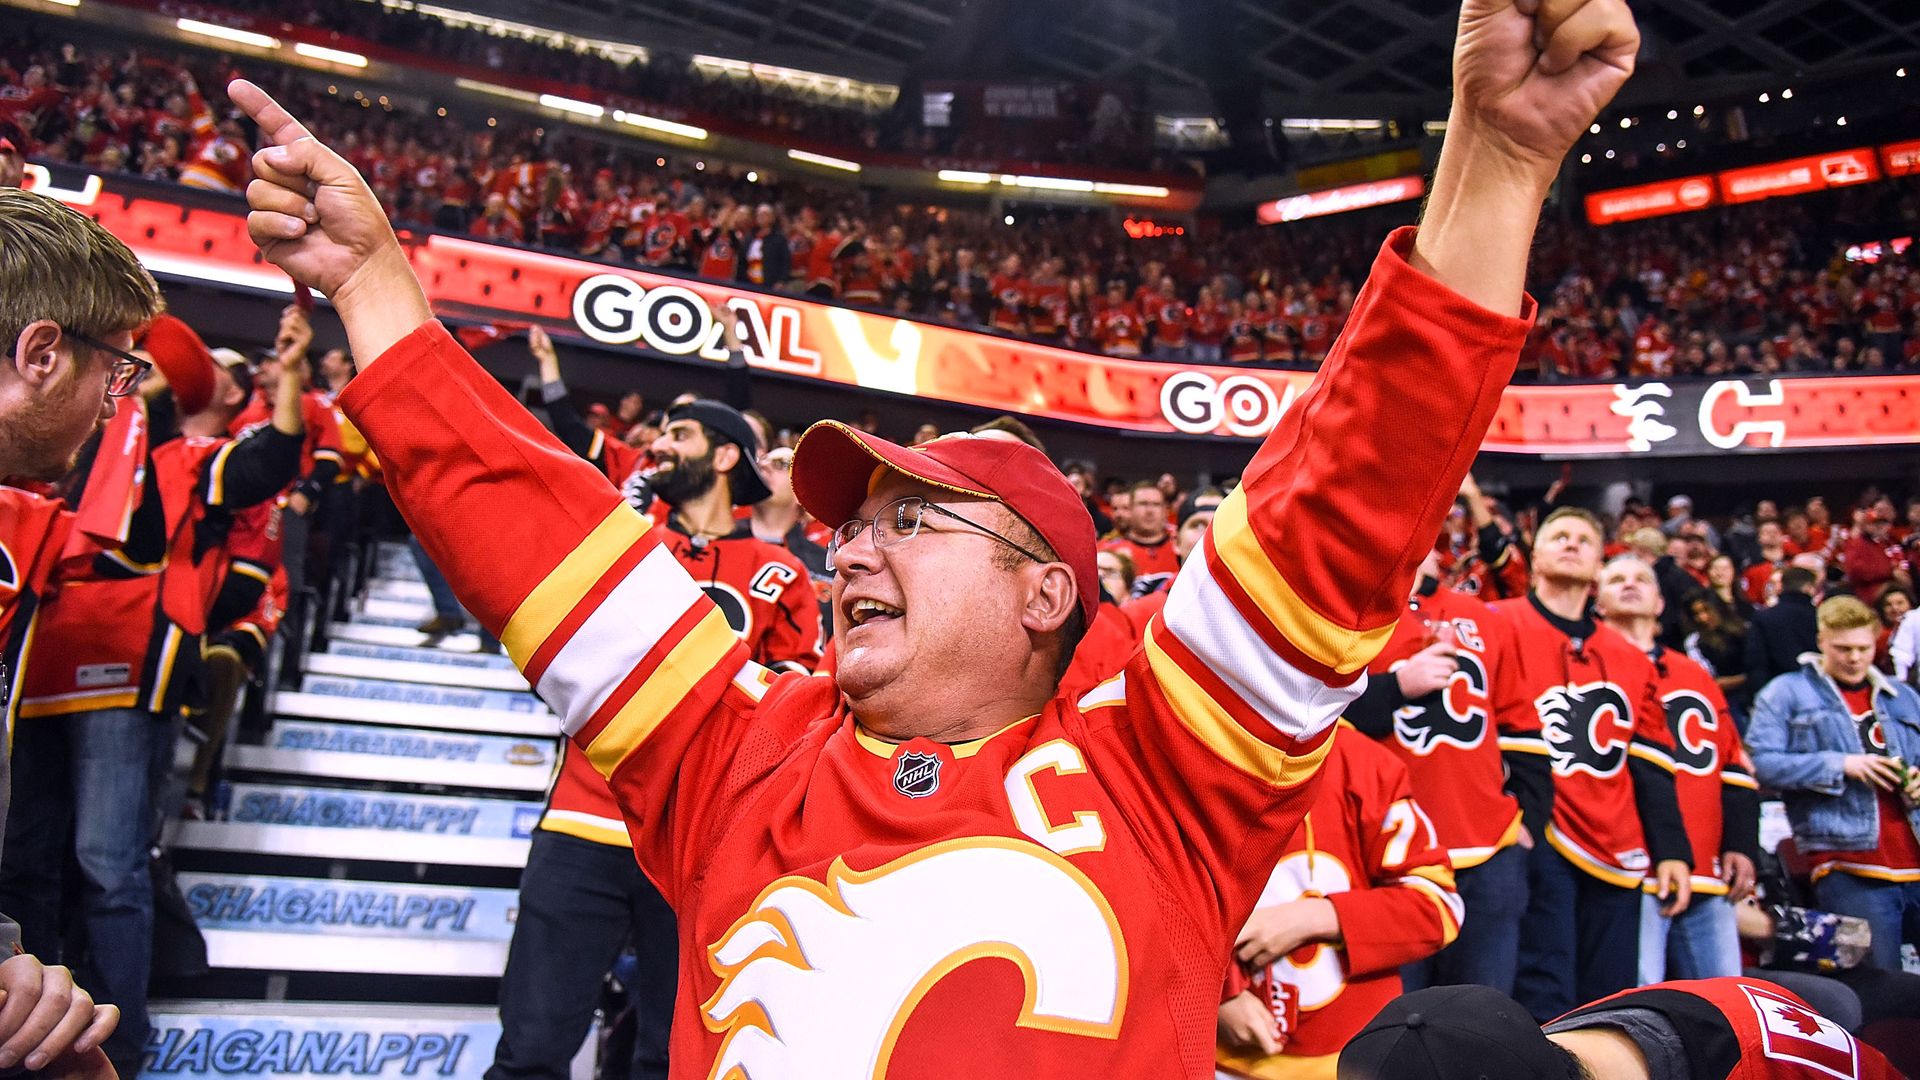 Calgary Flames fan celebrating